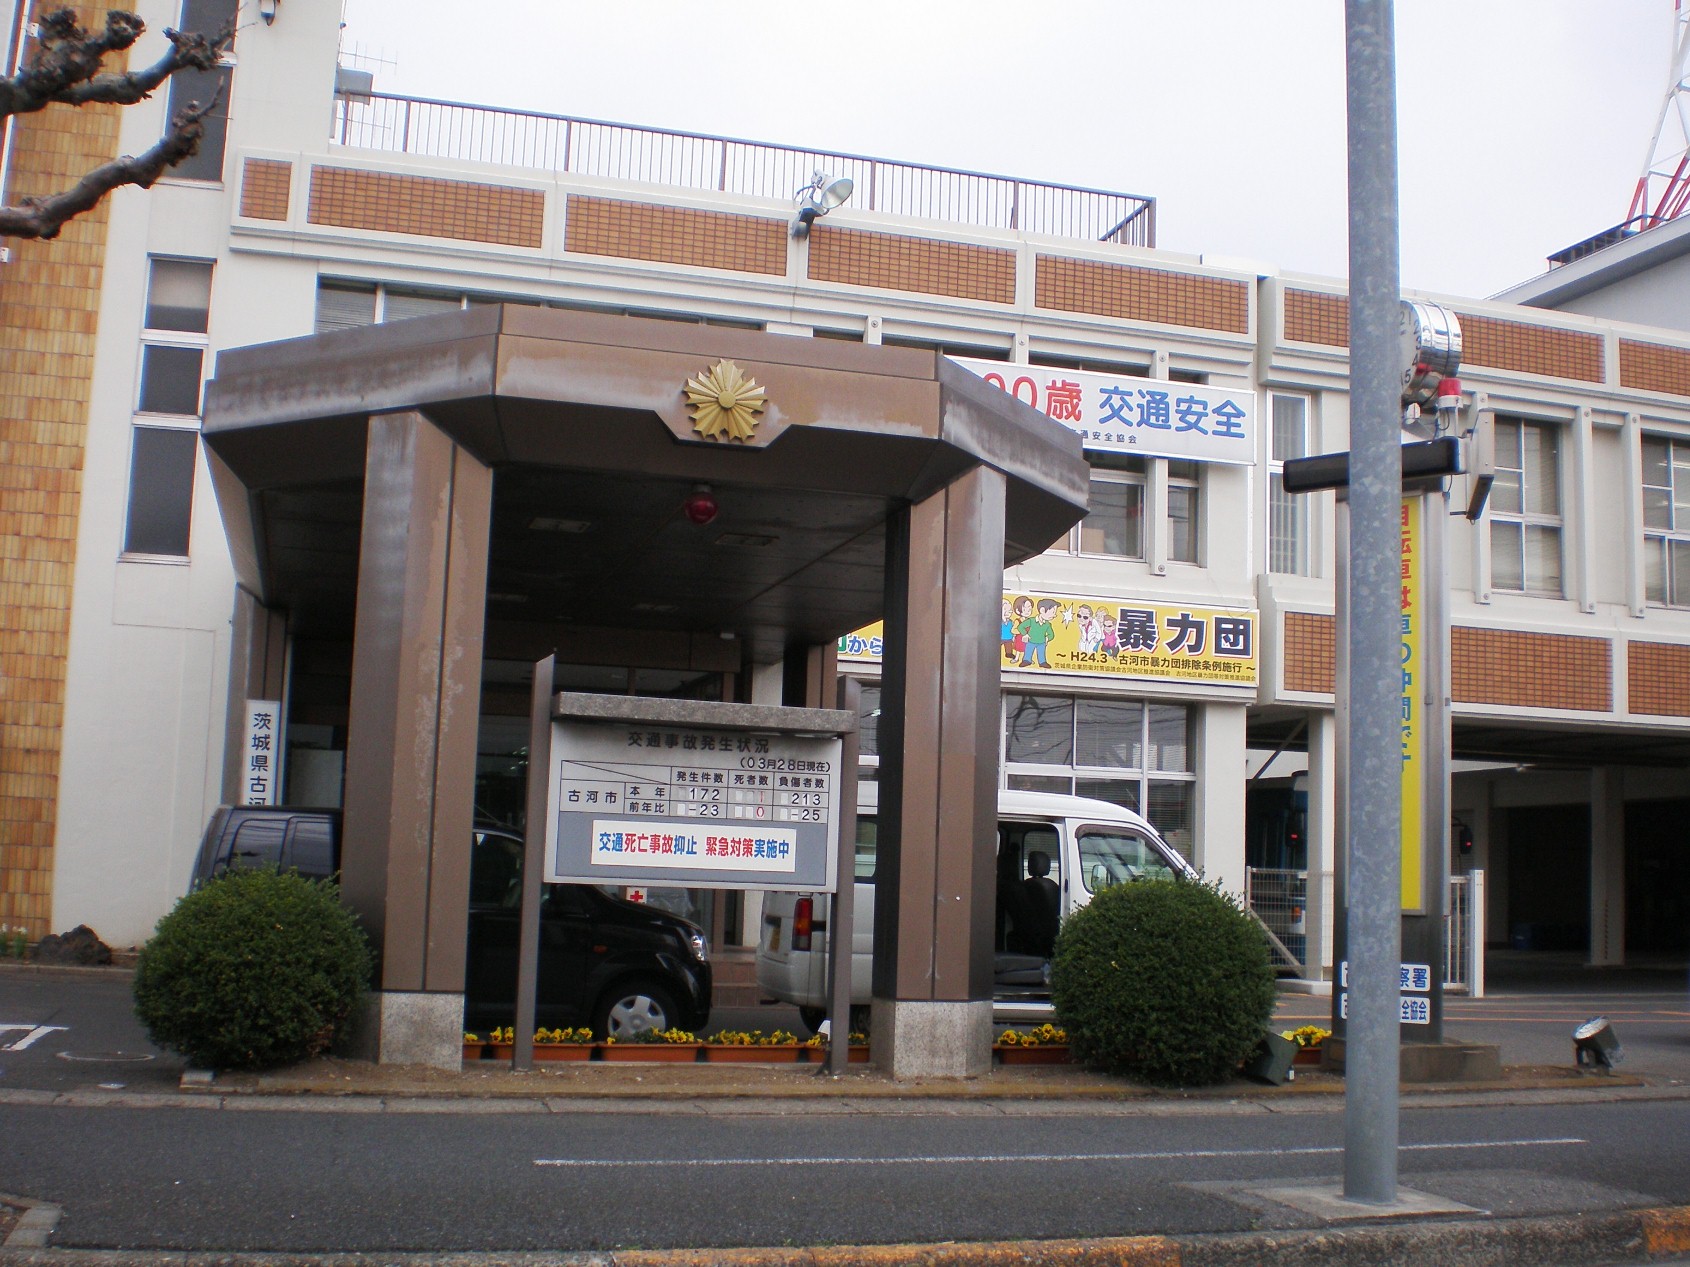 Police station ・ Police box. Furukawa police station (police station ・ Until alternating) 993m